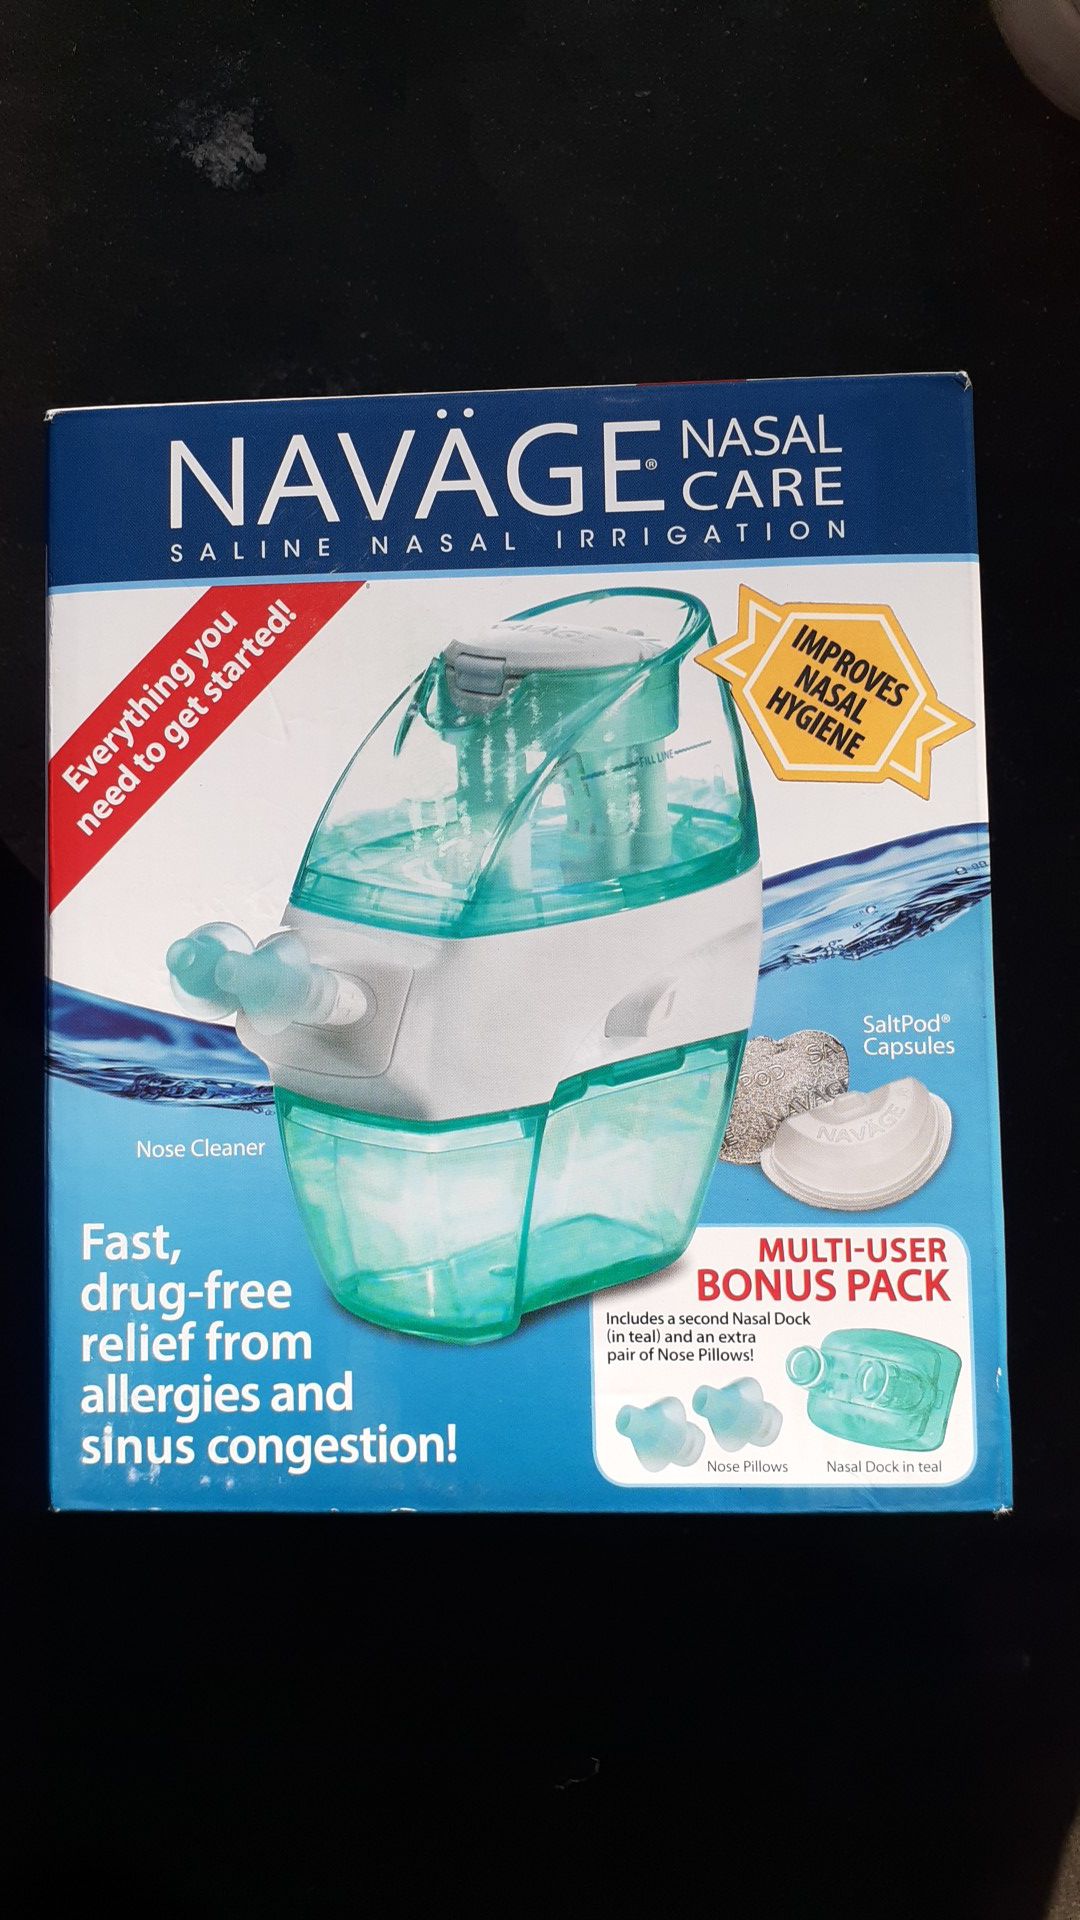 Navage Nasal Care.